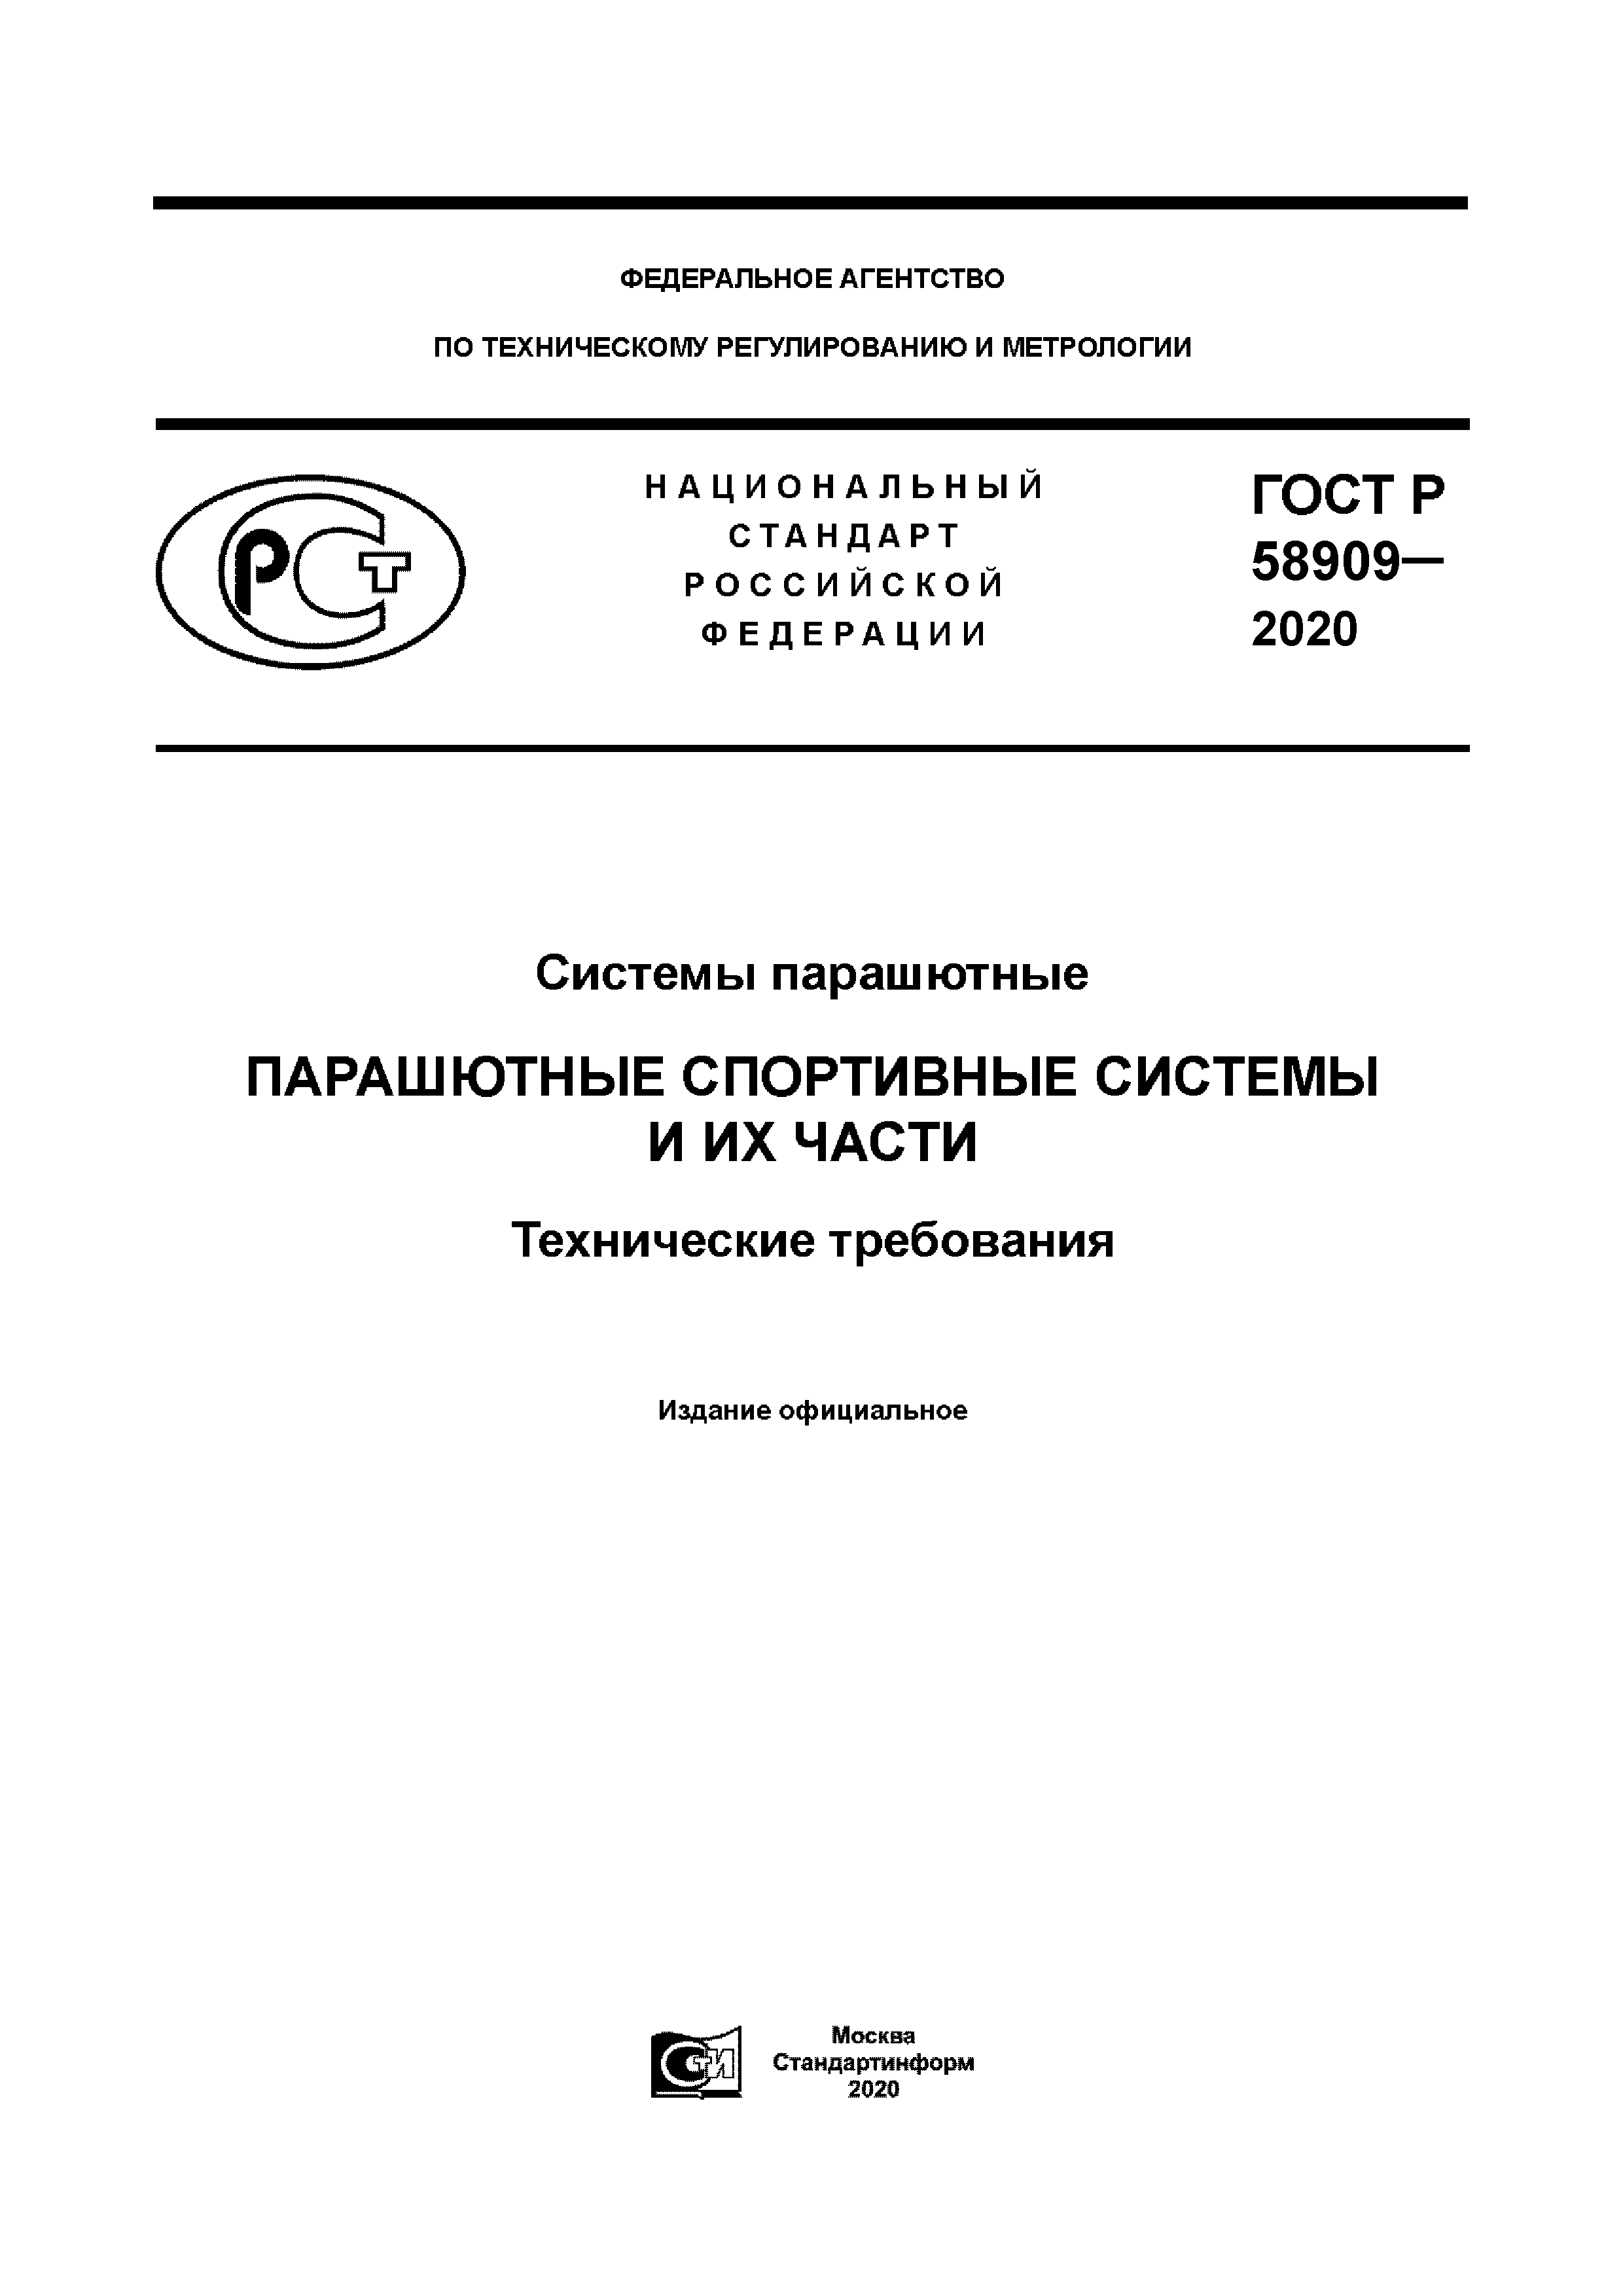 ГОСТ Р 58909-2020